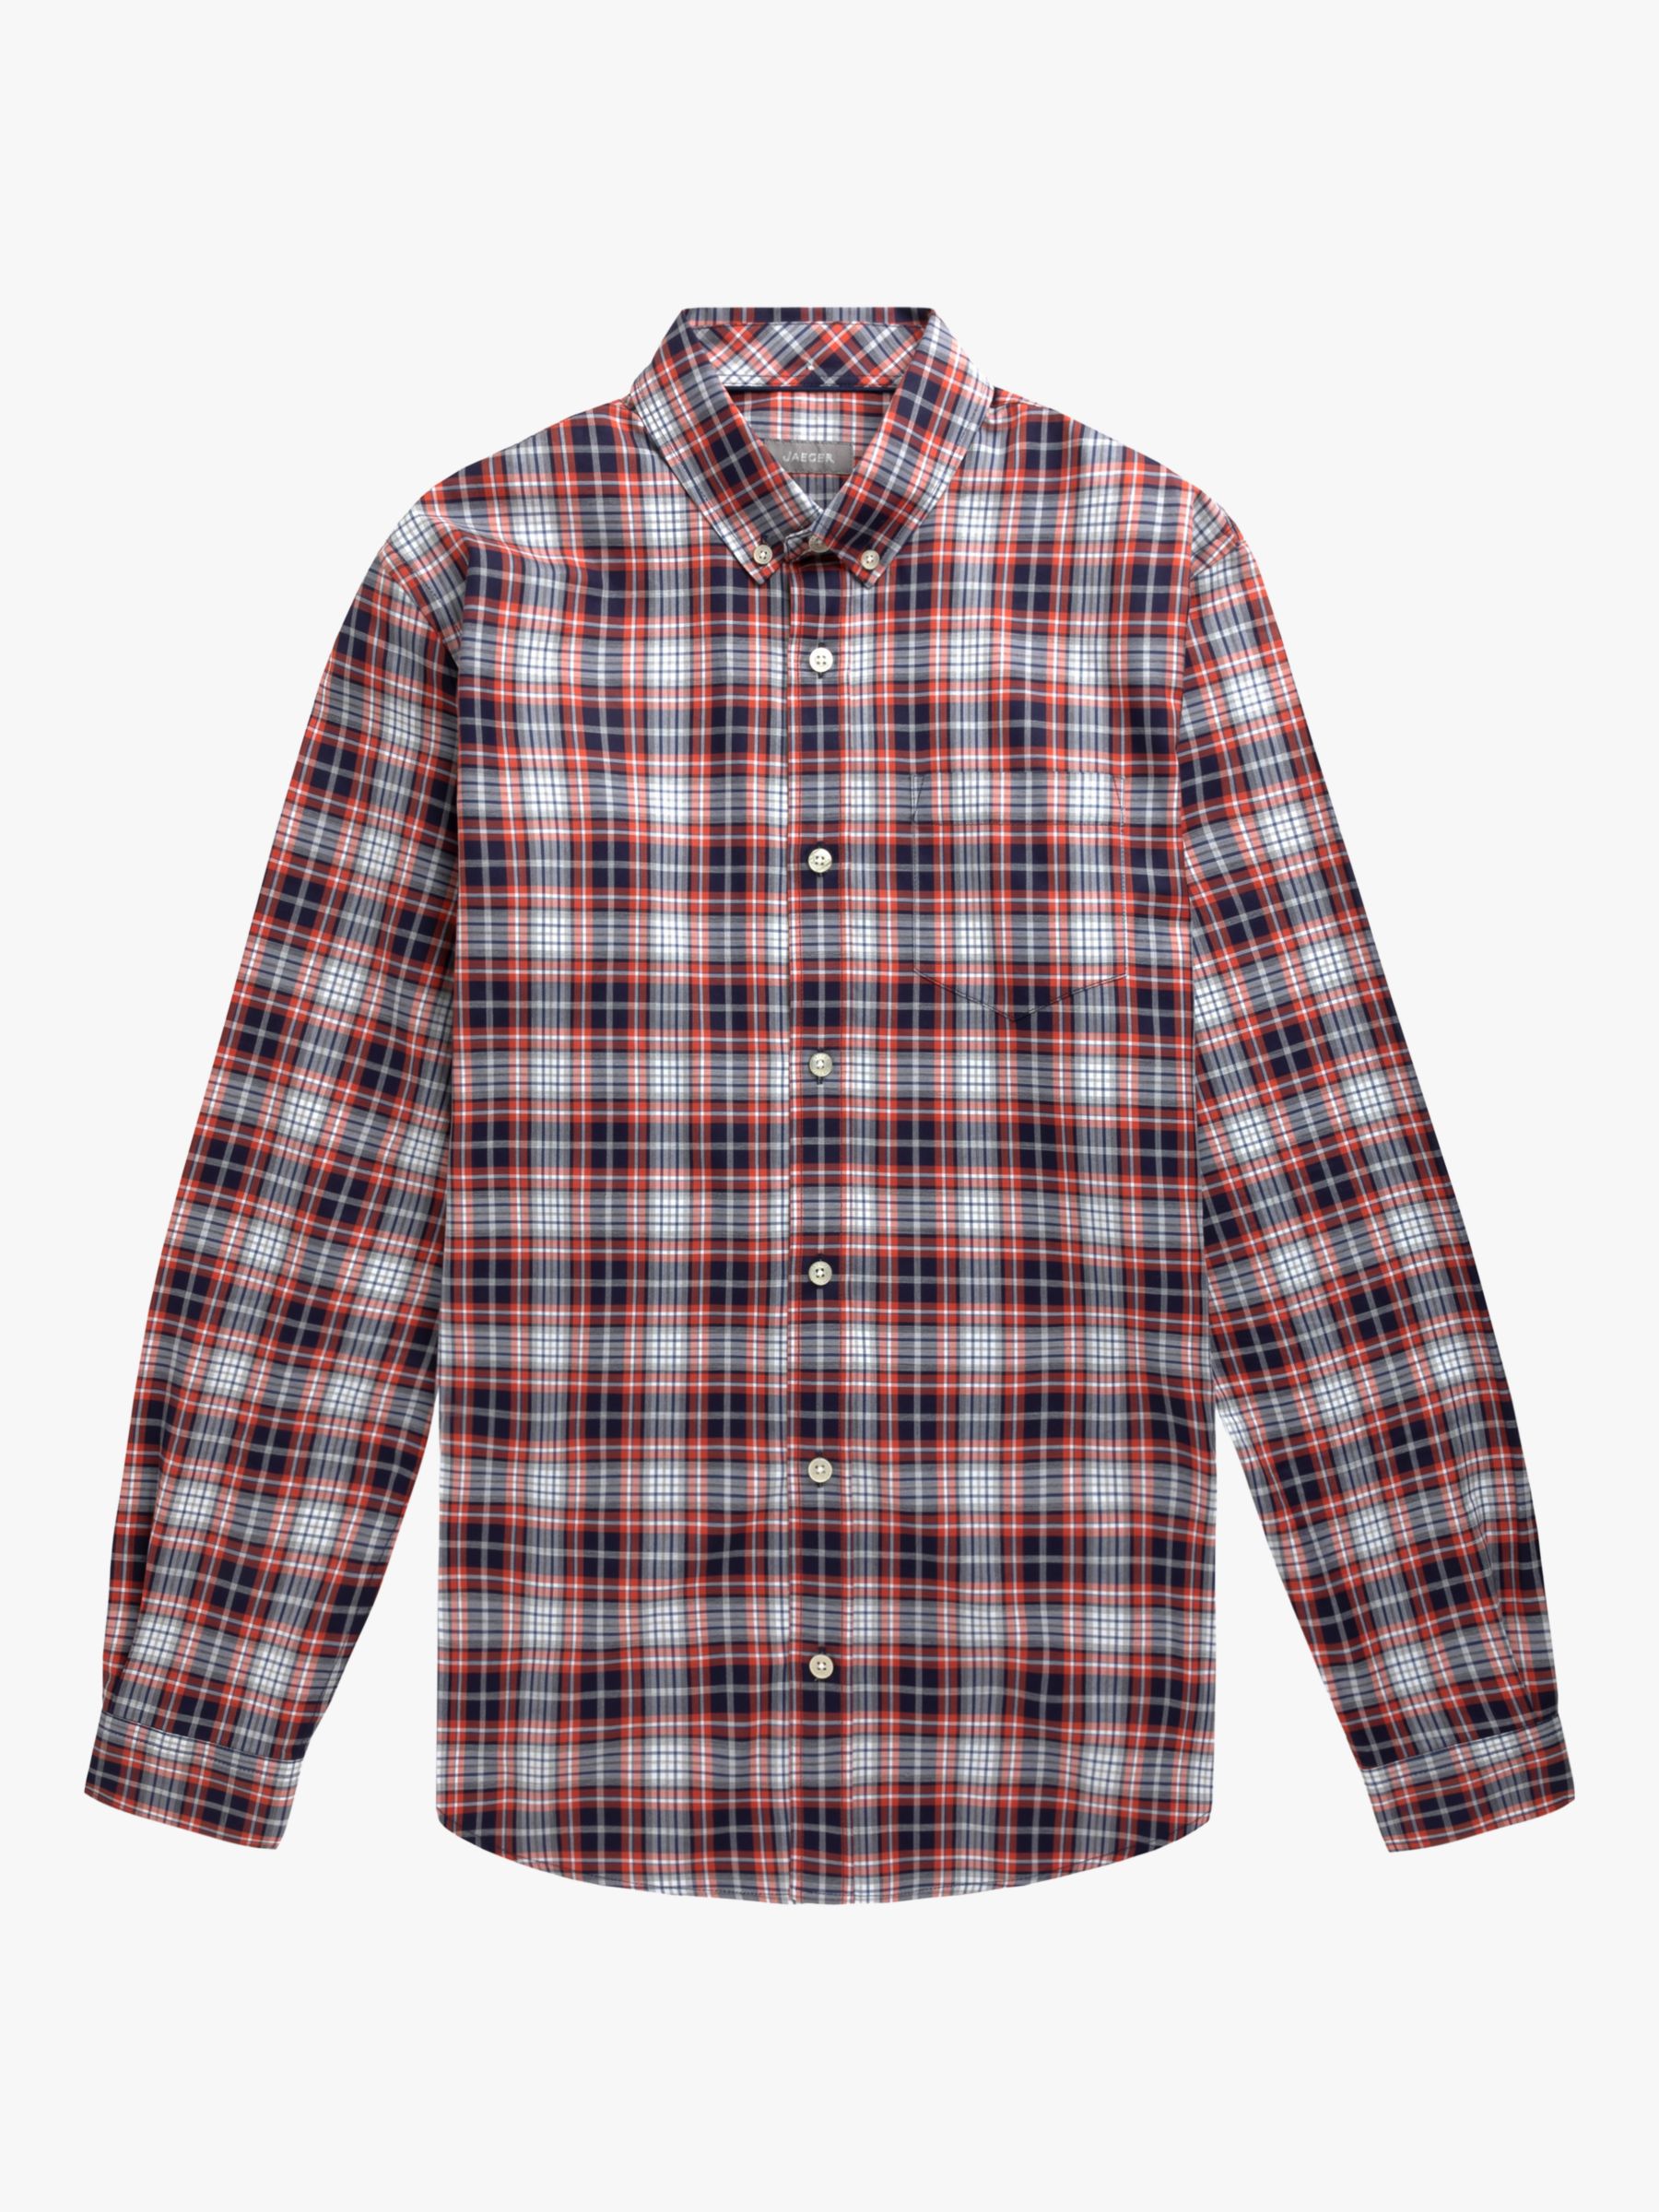 Jaeger Cotton Check Shirt, Multi